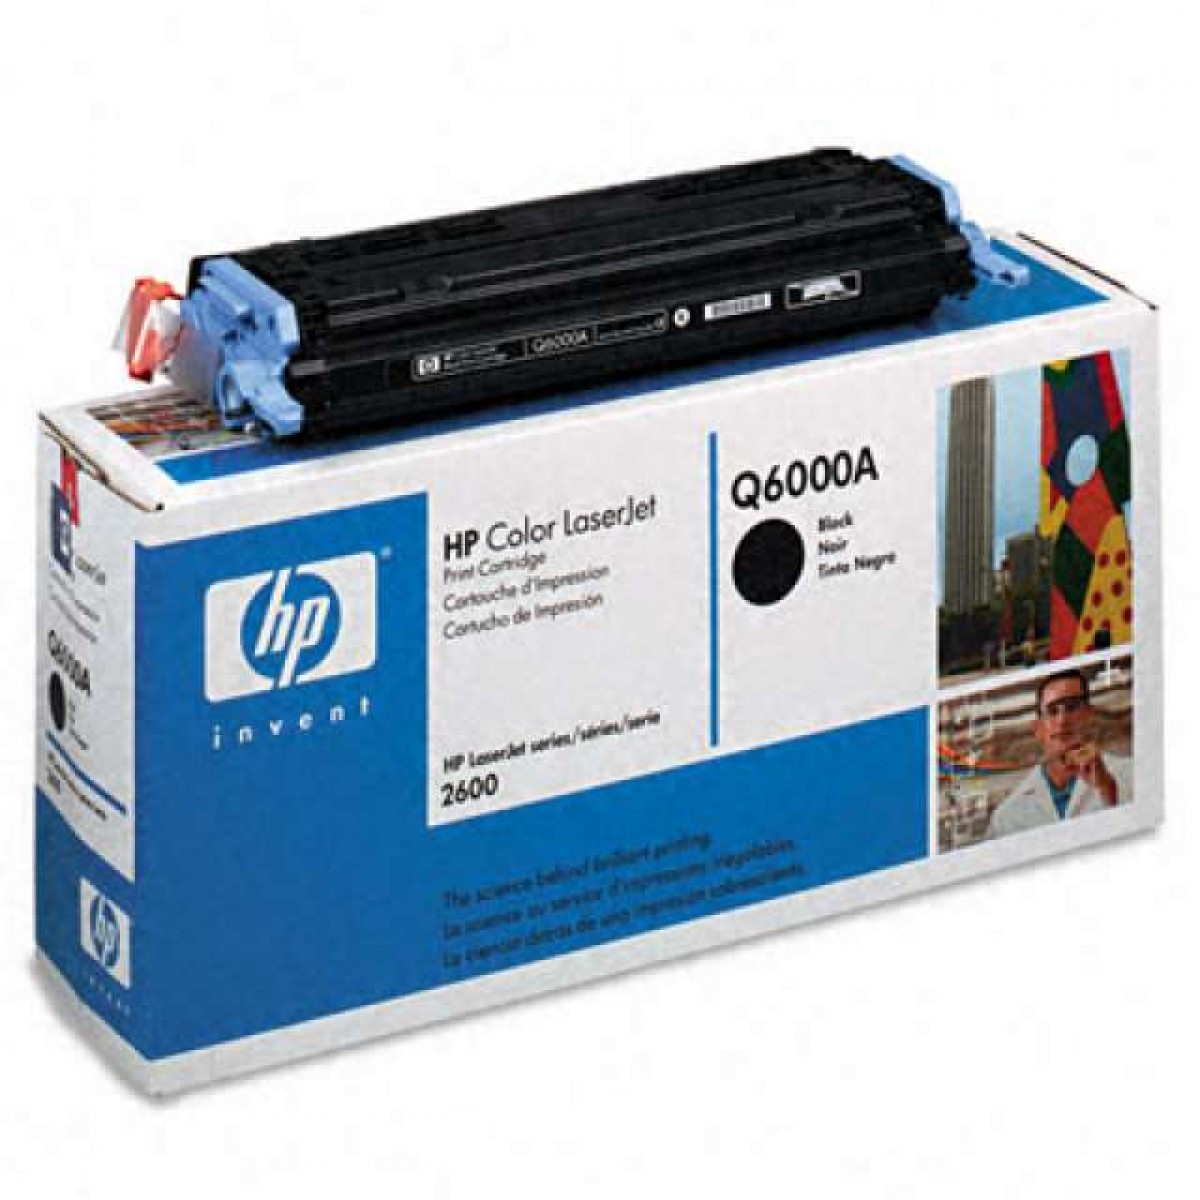 HP Q6000A Toner Cartridge Refills & Refill Kits